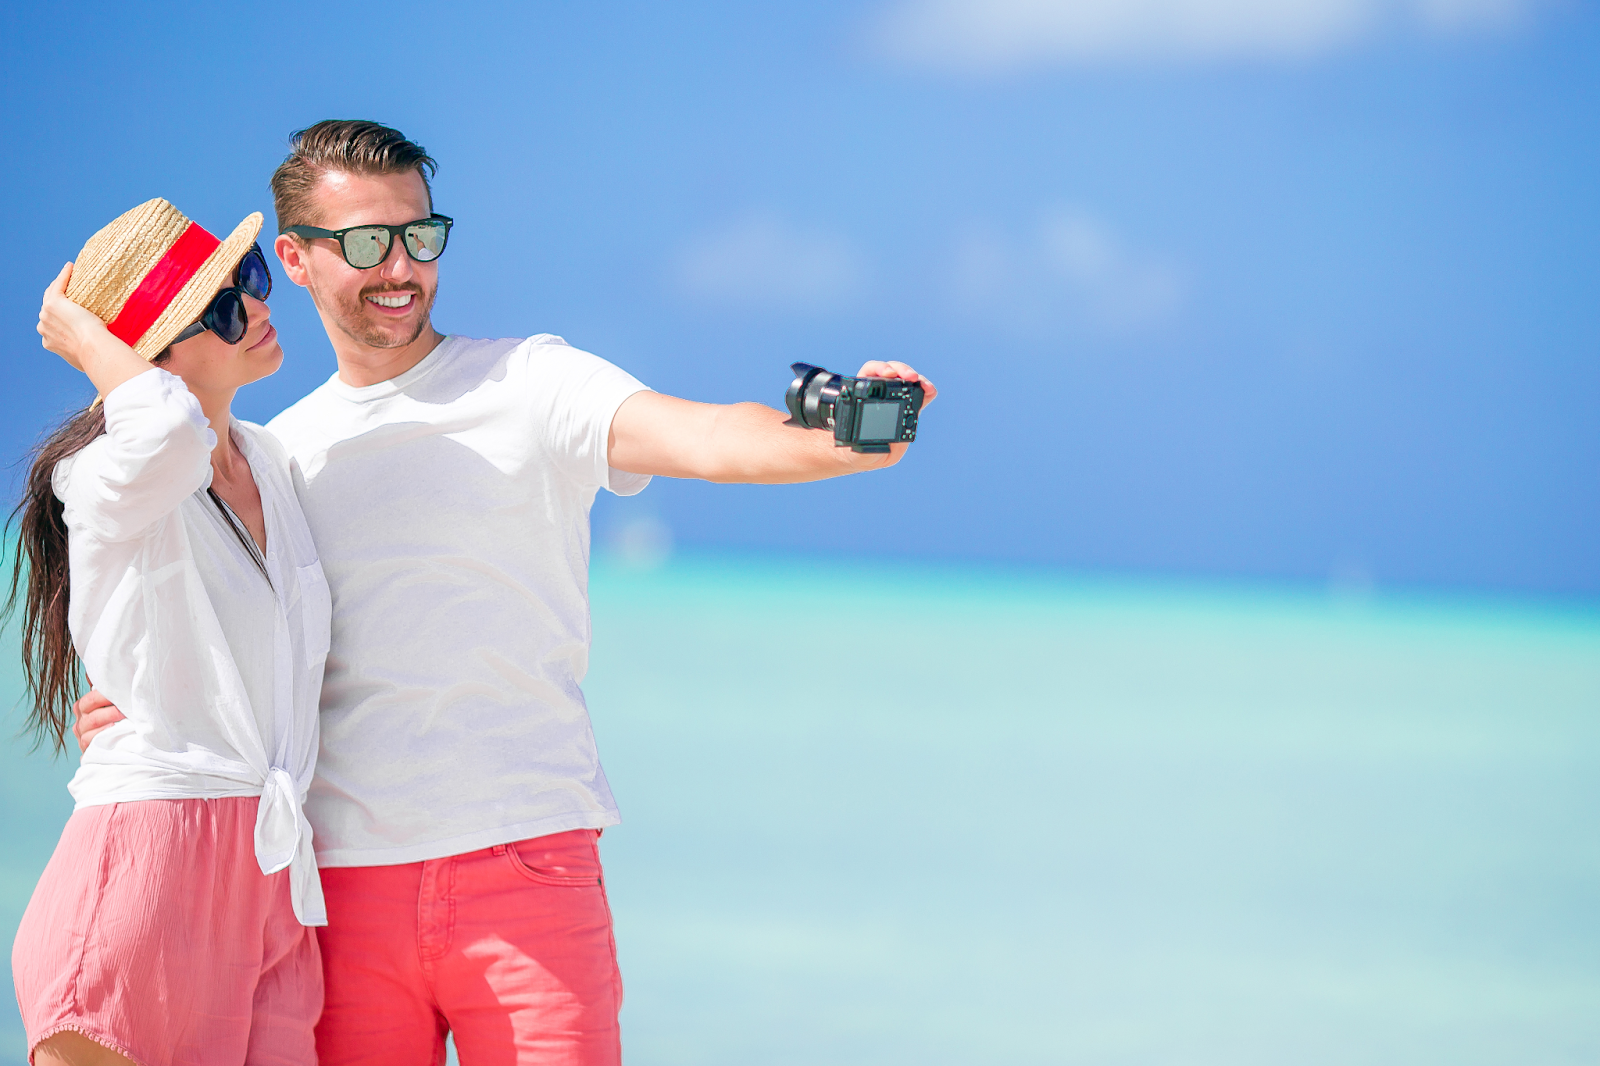 taking selfies on the beach